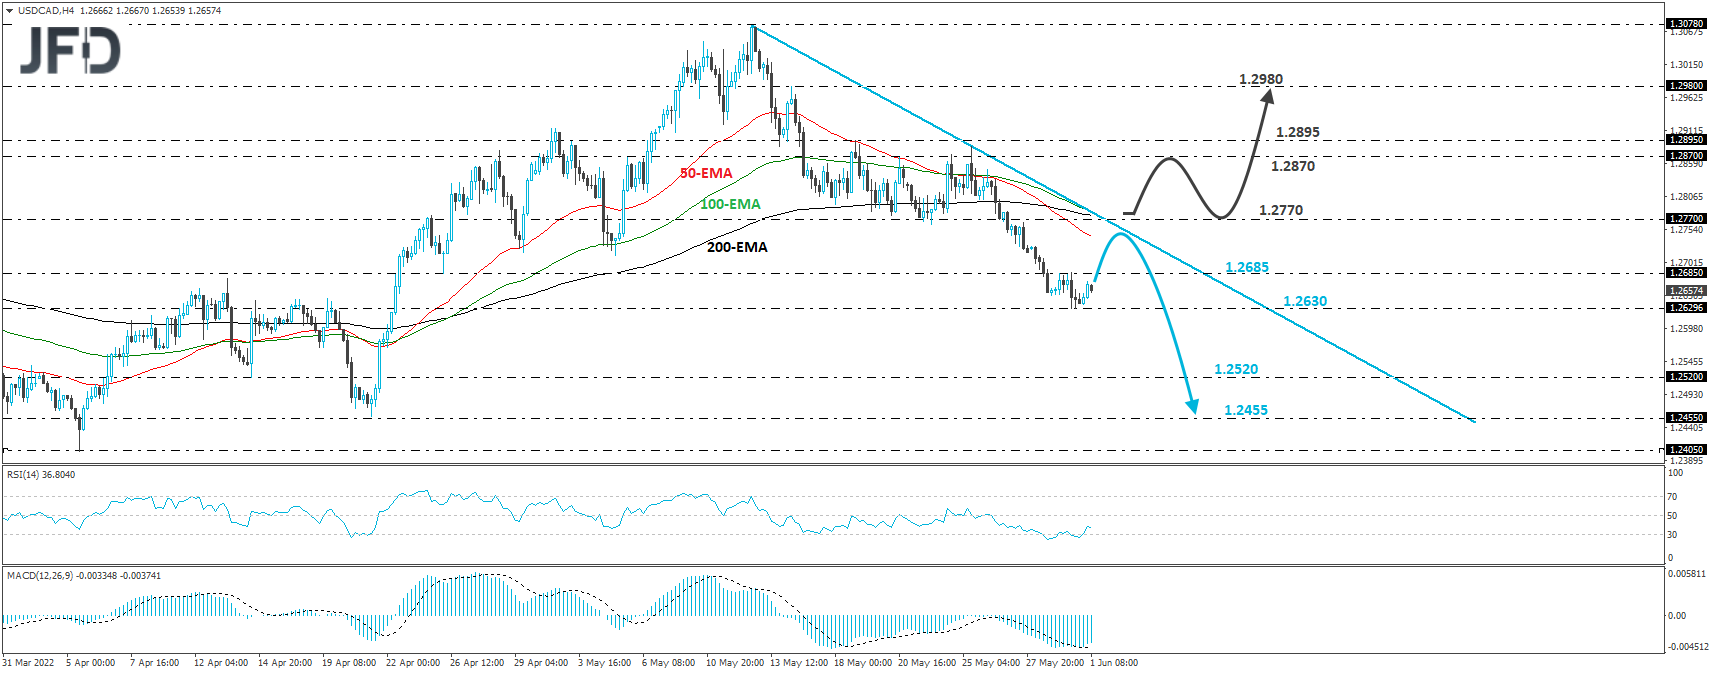 USD/CAD 4-hour chart technical analysis.